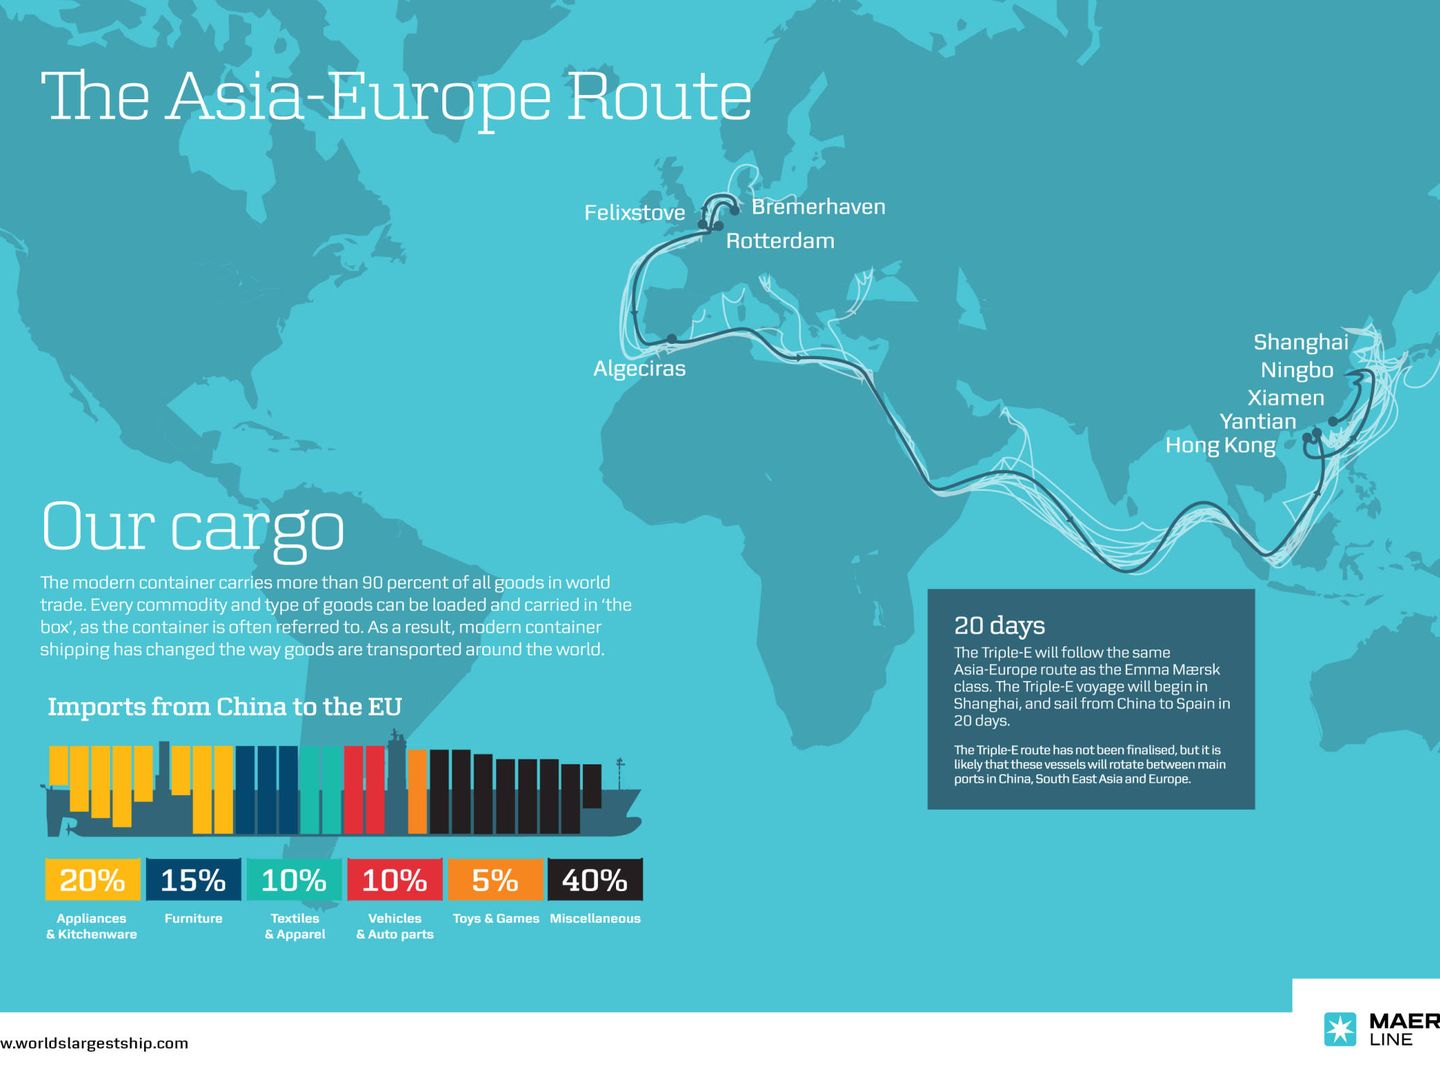 La ruta Asia-Europa de los Triple E de Maersk con escala en Algeciras. (Maersk)